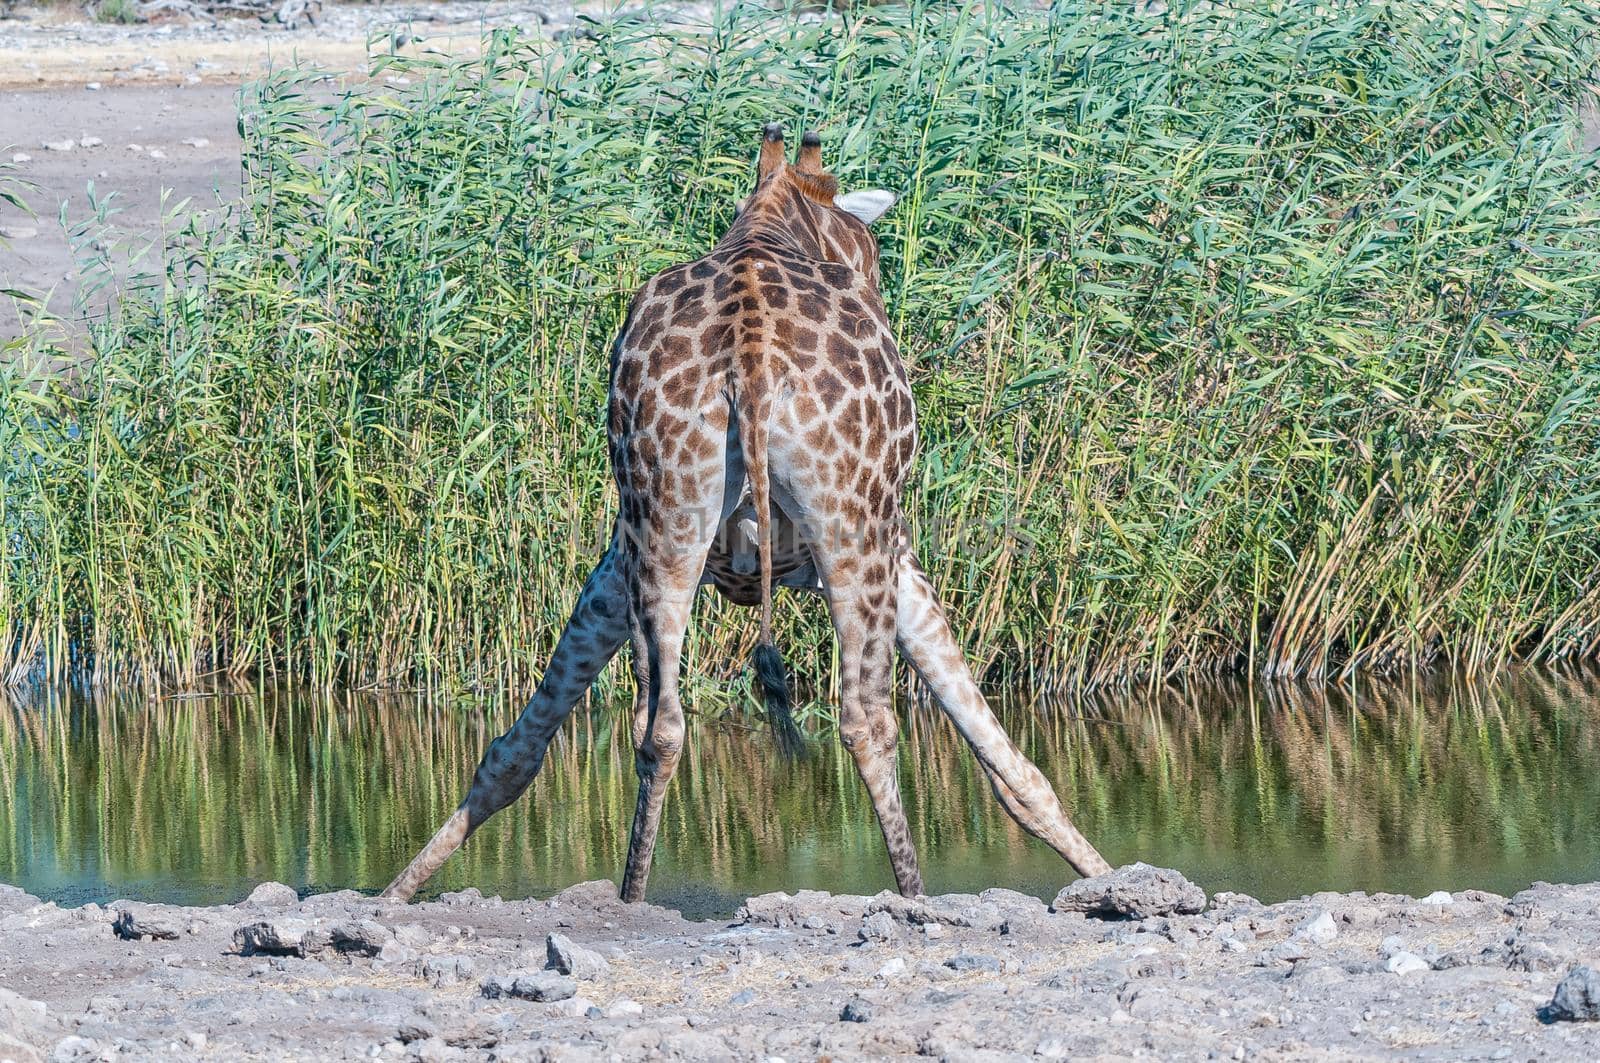 A namibian giraffe drinking water at a waterhole in northern Namibia